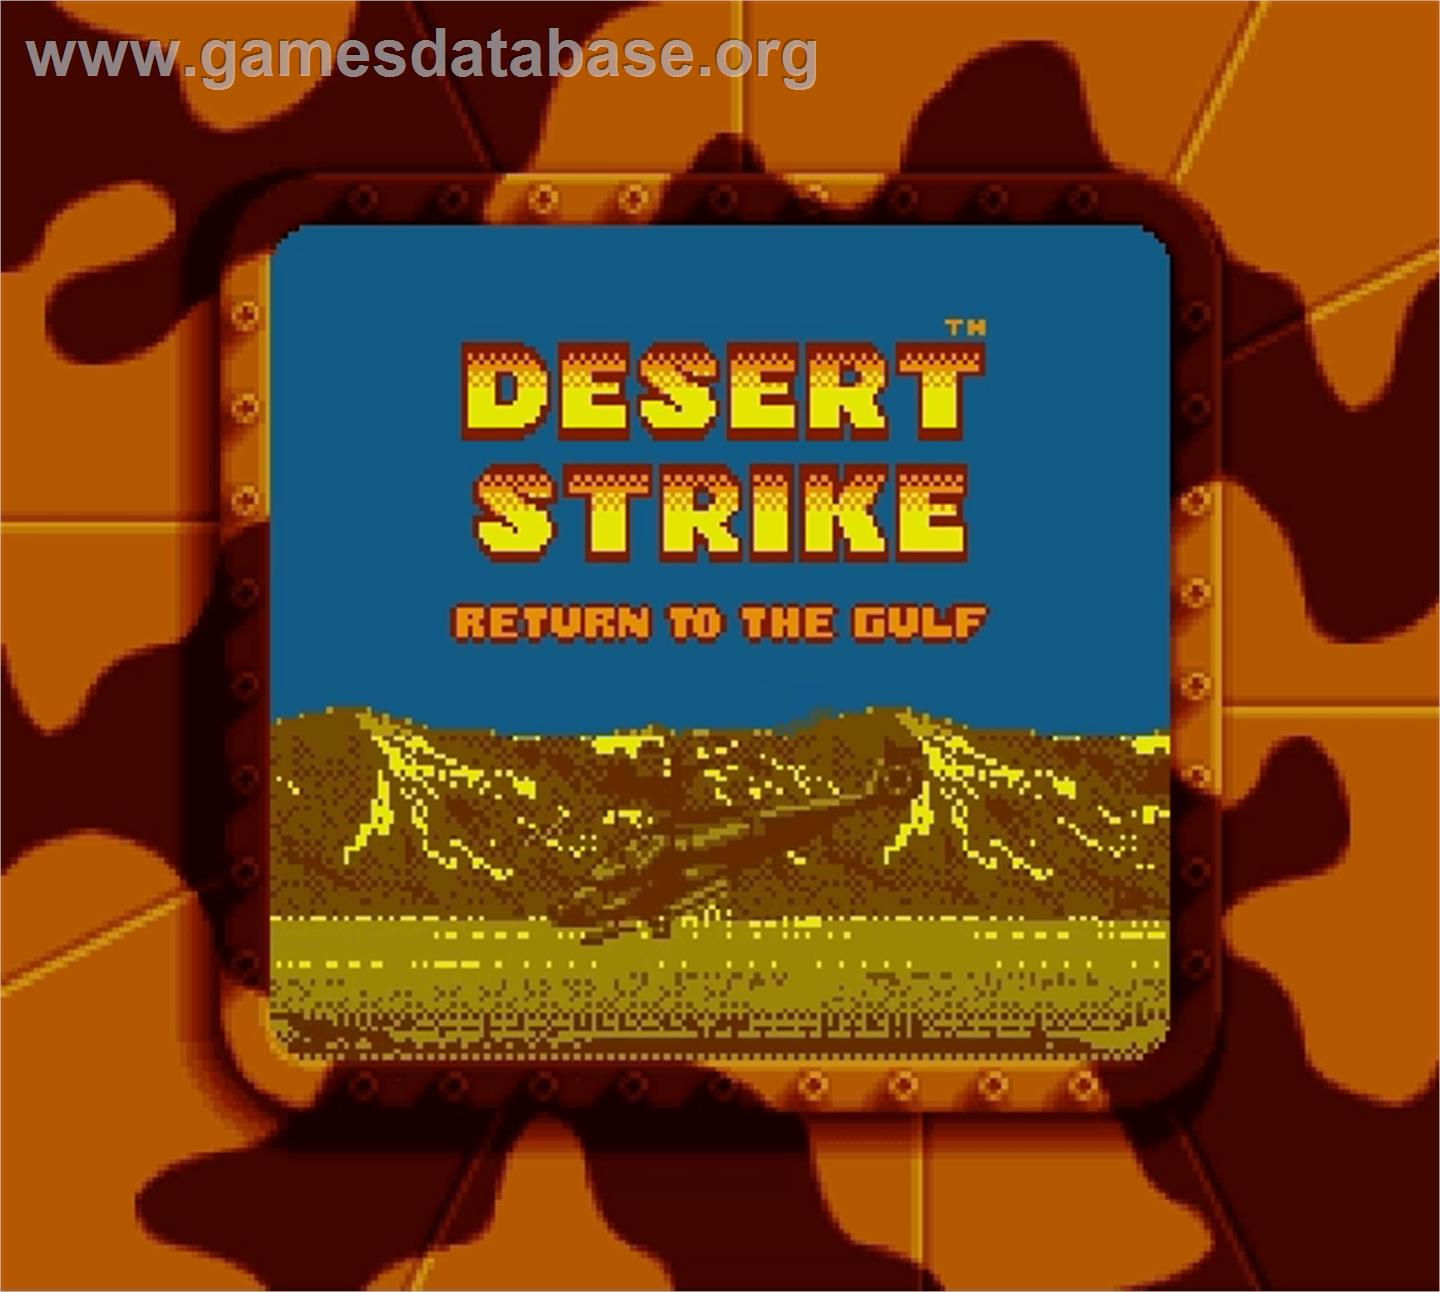 Desert Strike - Return to the Gulf - Nintendo Super Gameboy - Artwork - Title Screen